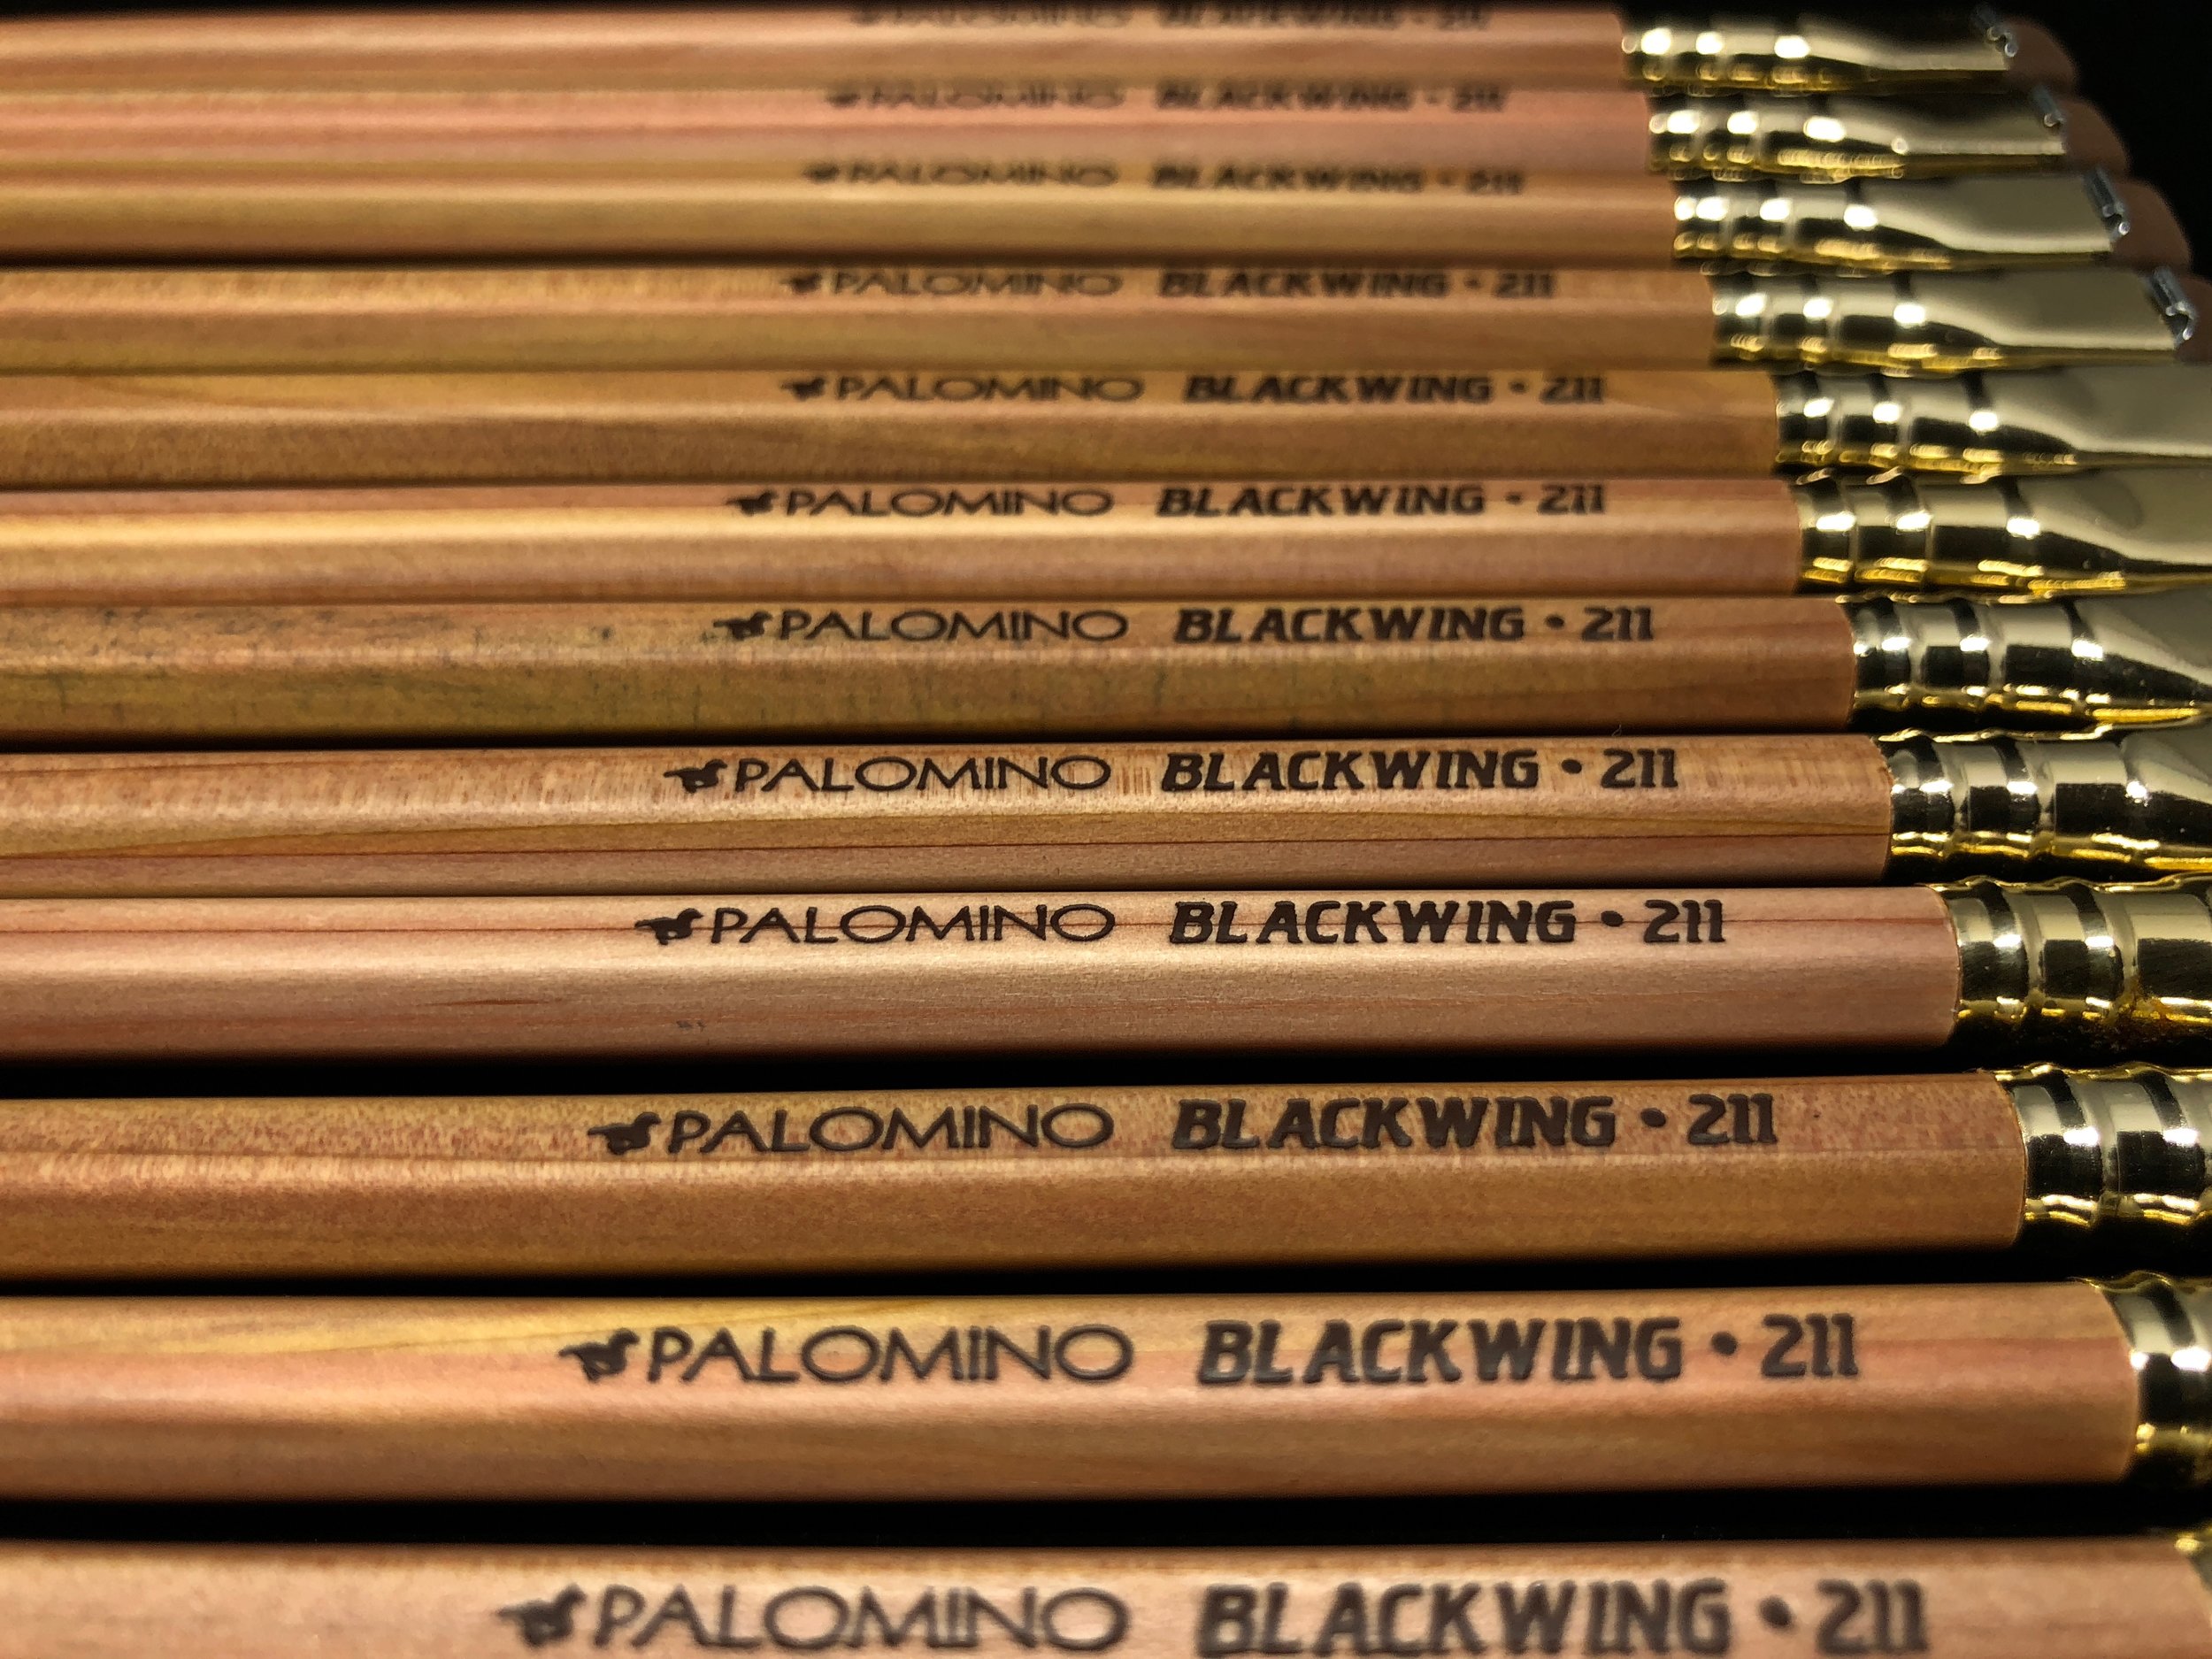 Palomino Blackwing Volumes 211 CEDAR ONE PENCIL 